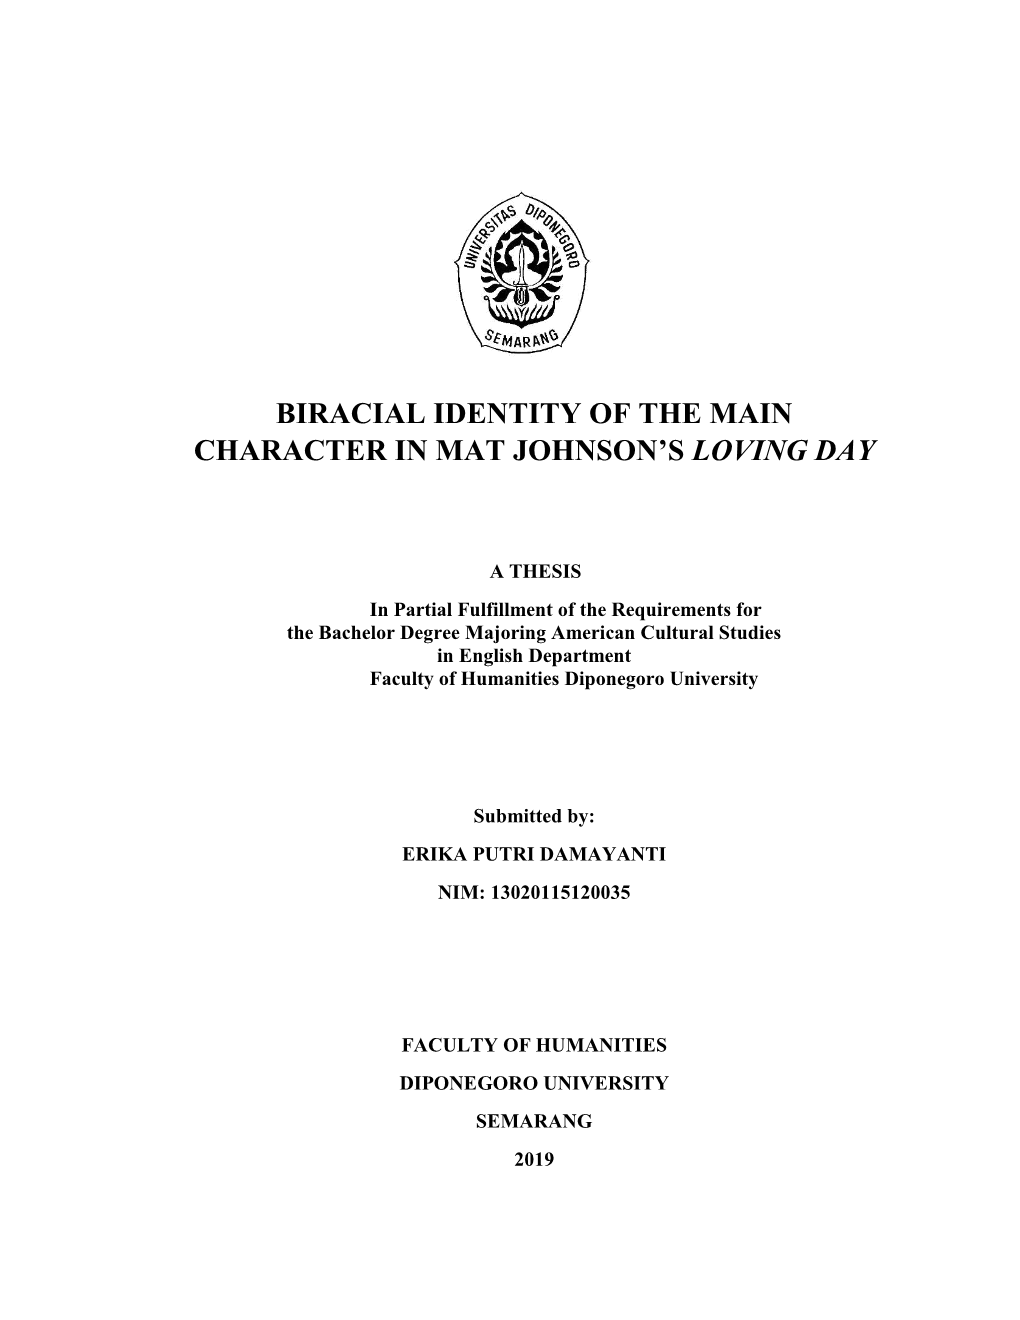 Biracial Identity of the Main Character in Mat Johnson's Loving